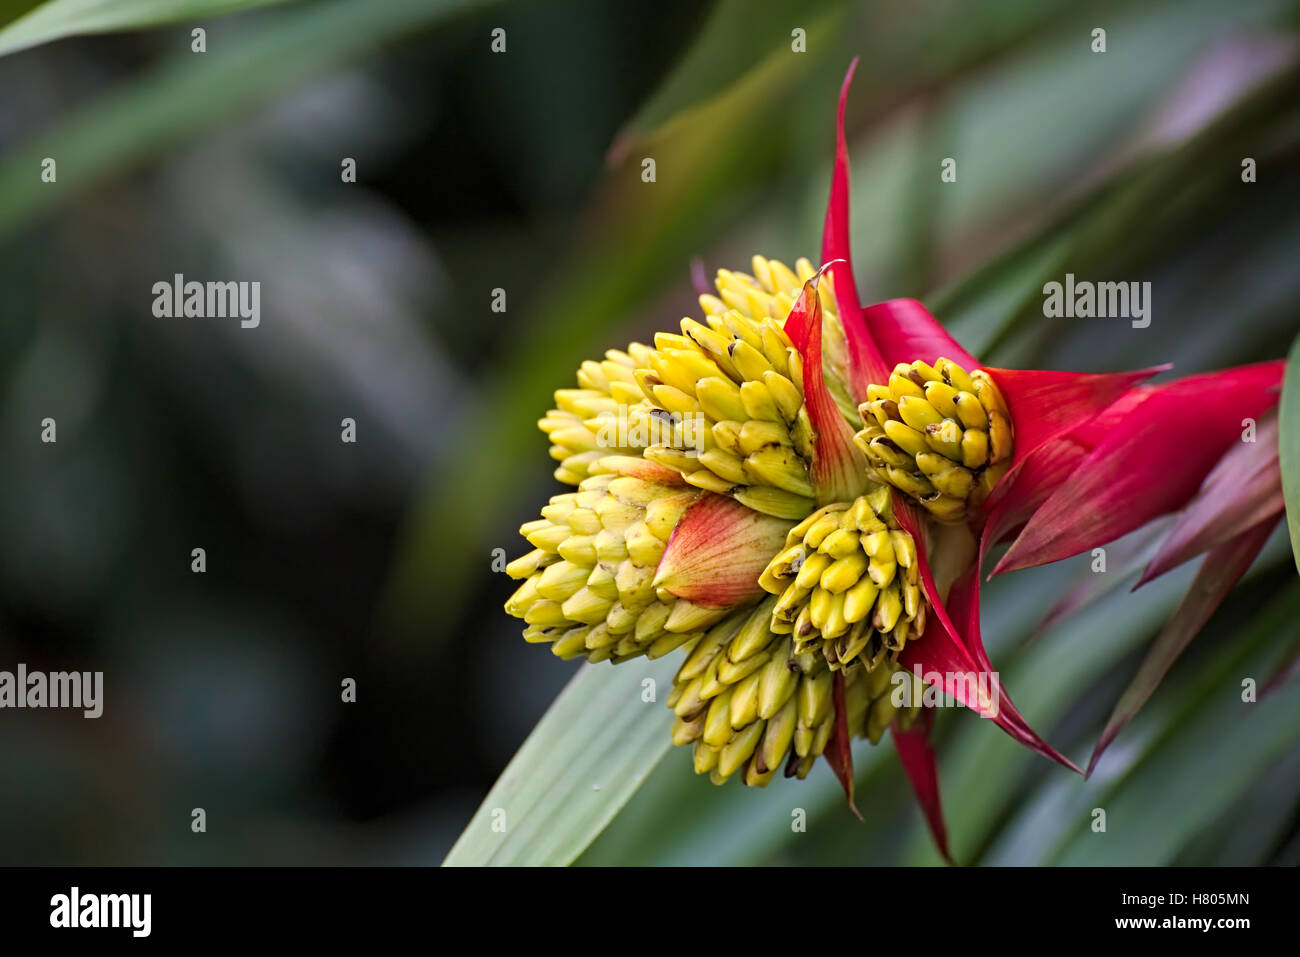 Blossom of a tufted airplant species (Guzmania). Stock Photo